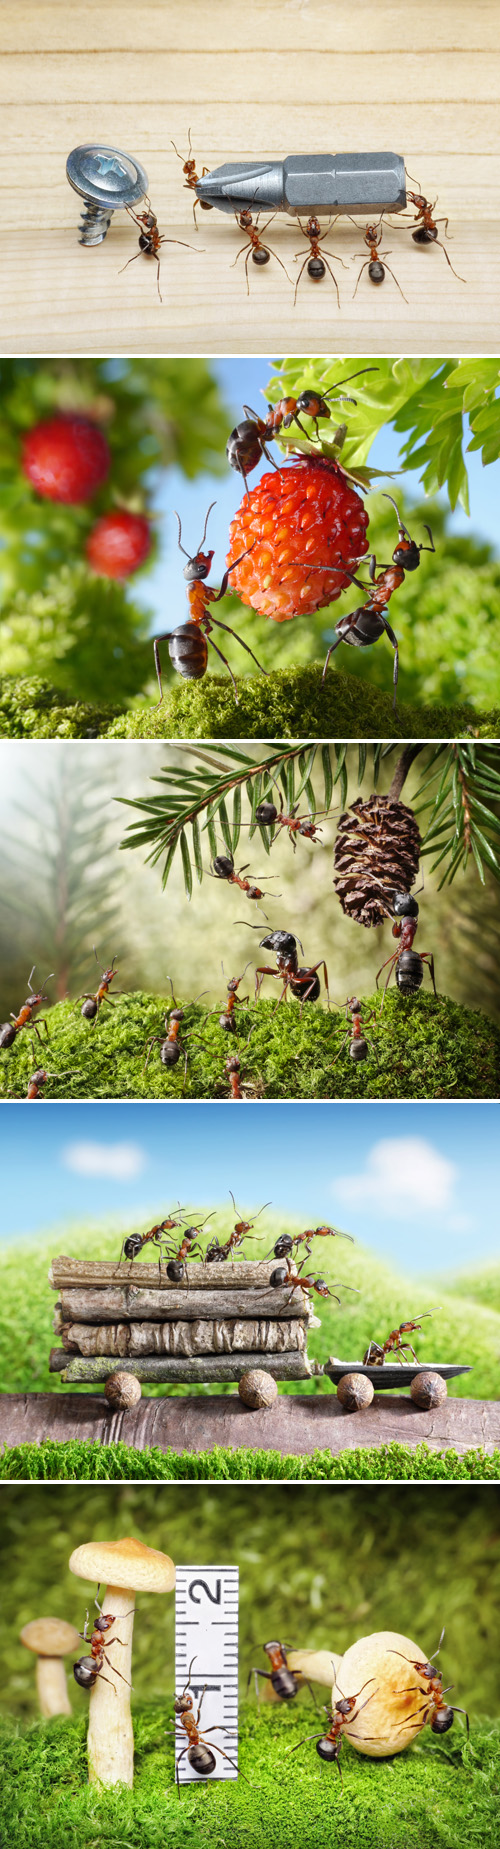 Stock Photos - World of Ants